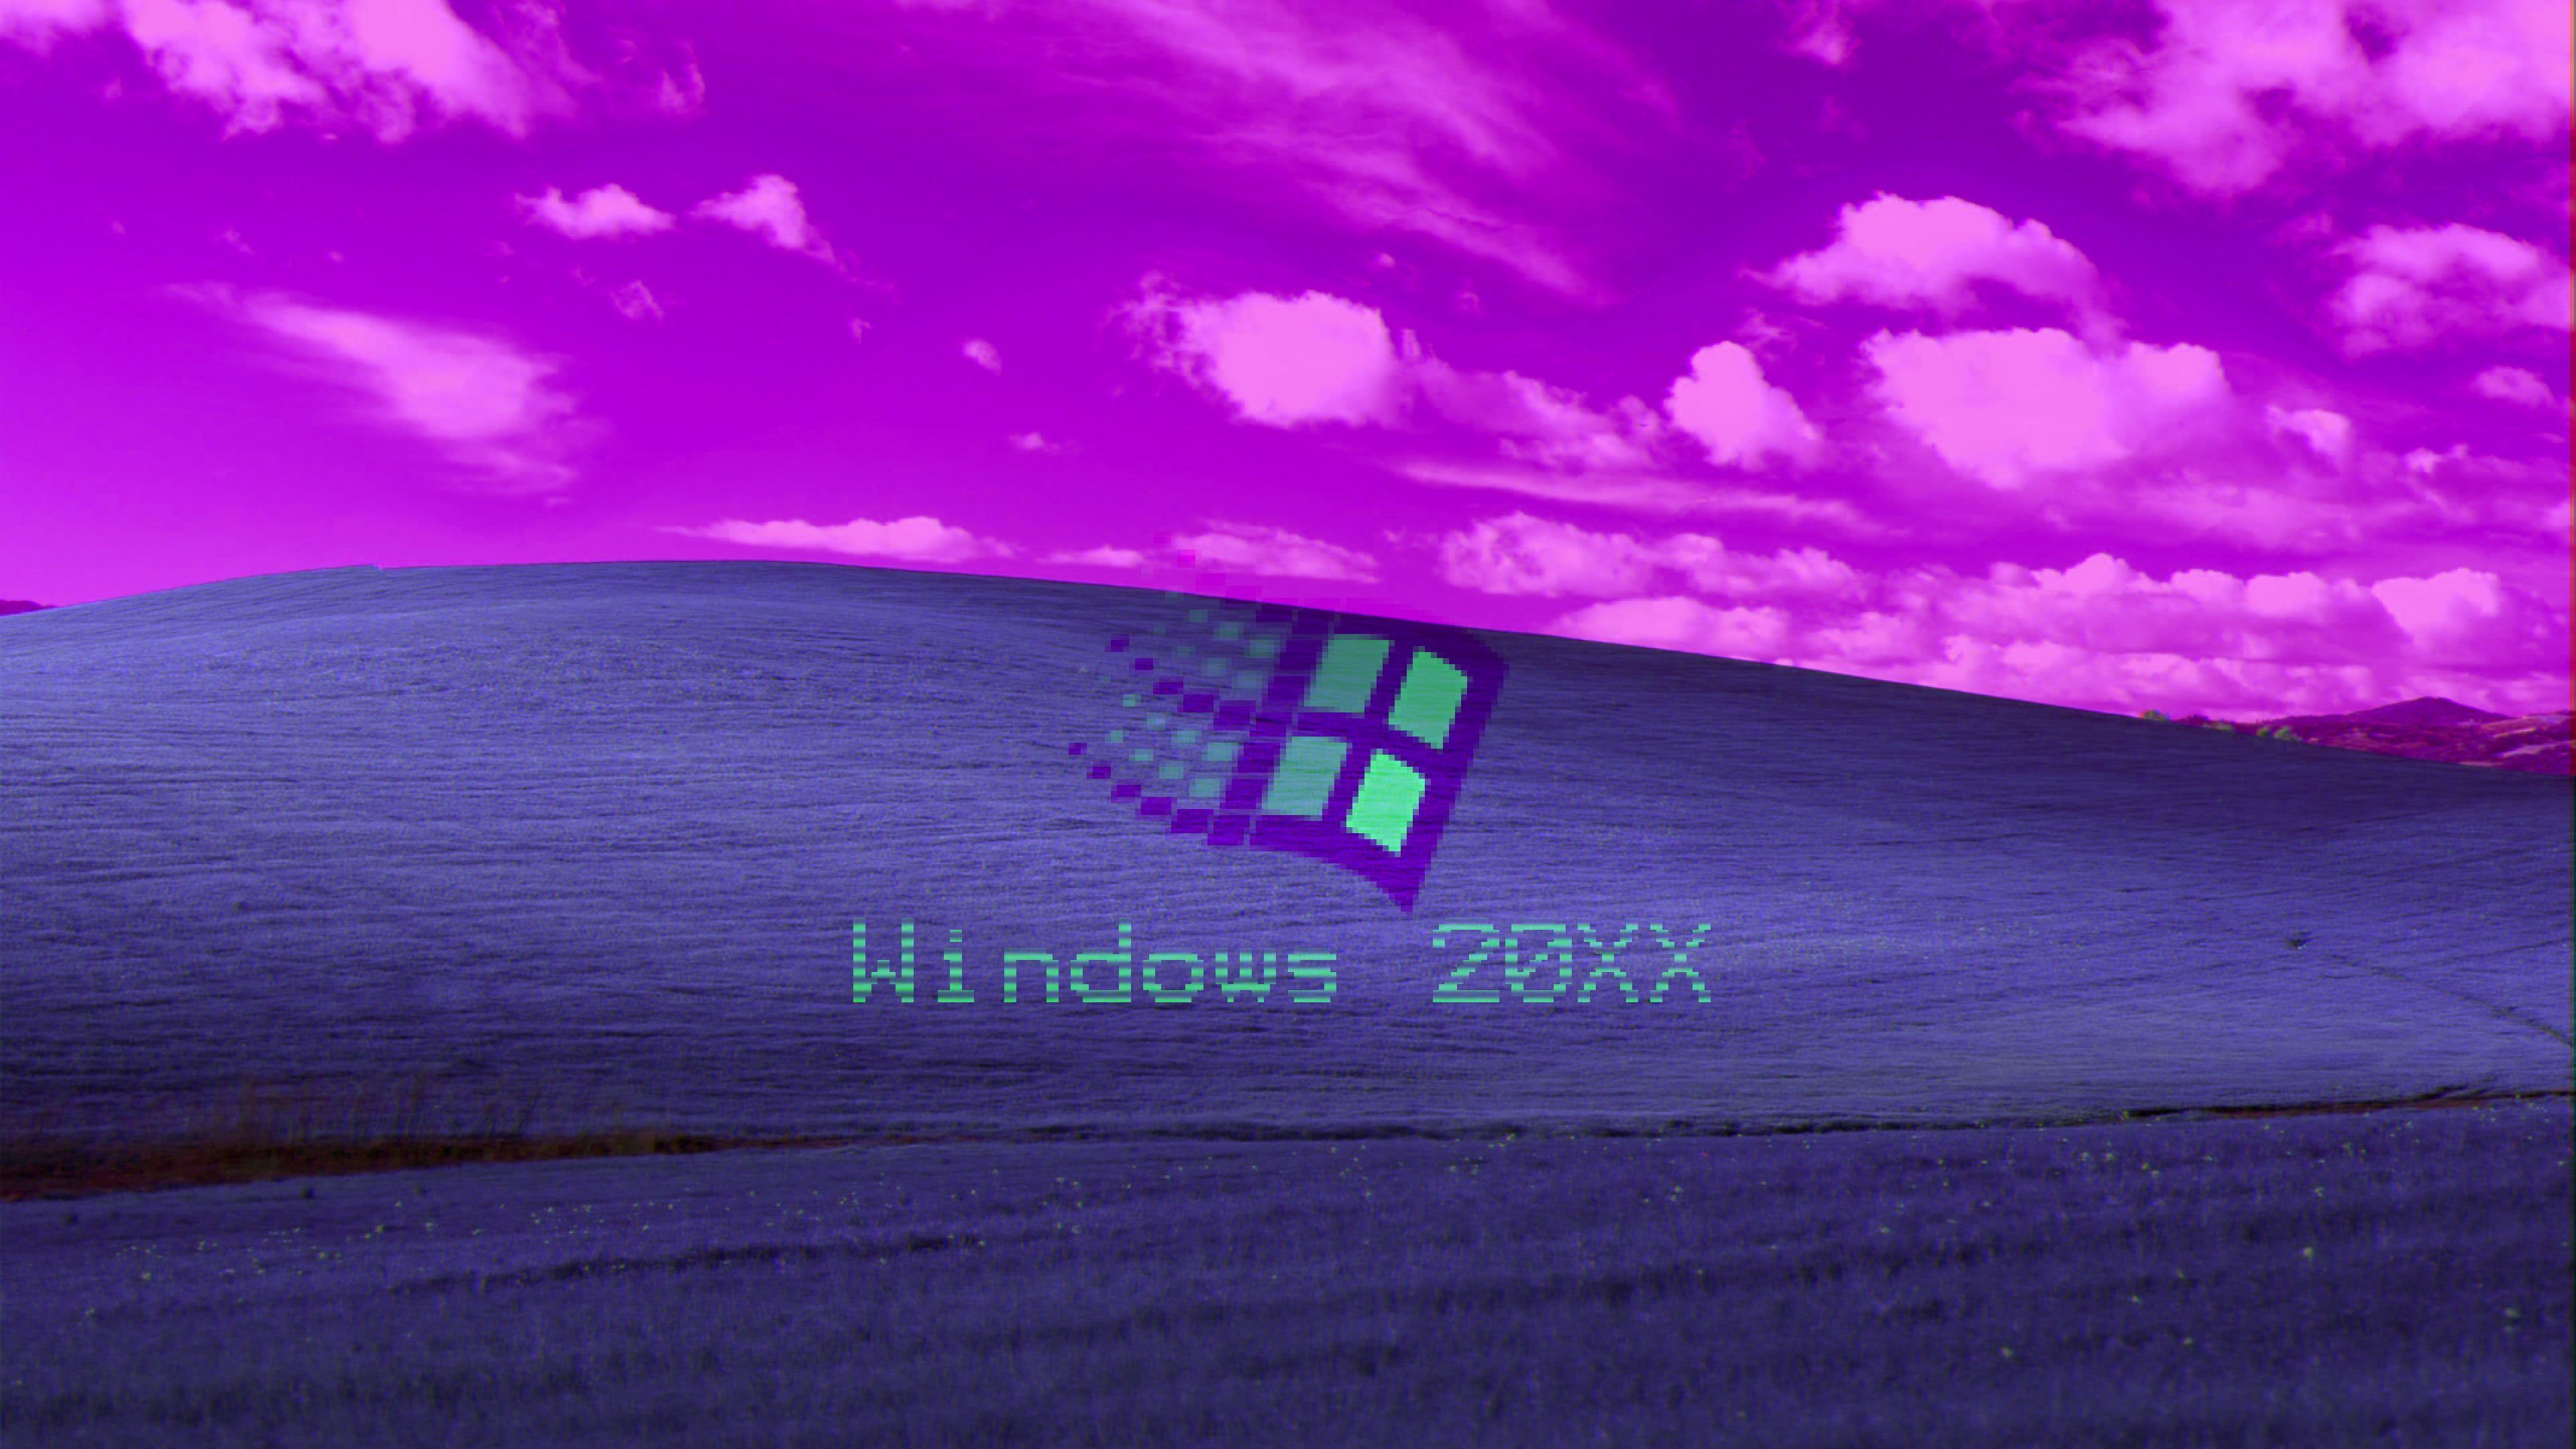 vaporwave #purple Windows XP Windows 98 #Retrowave K #wallpaper #hdwallpaper #desktop. Vaporwave, Windows, Windows 98